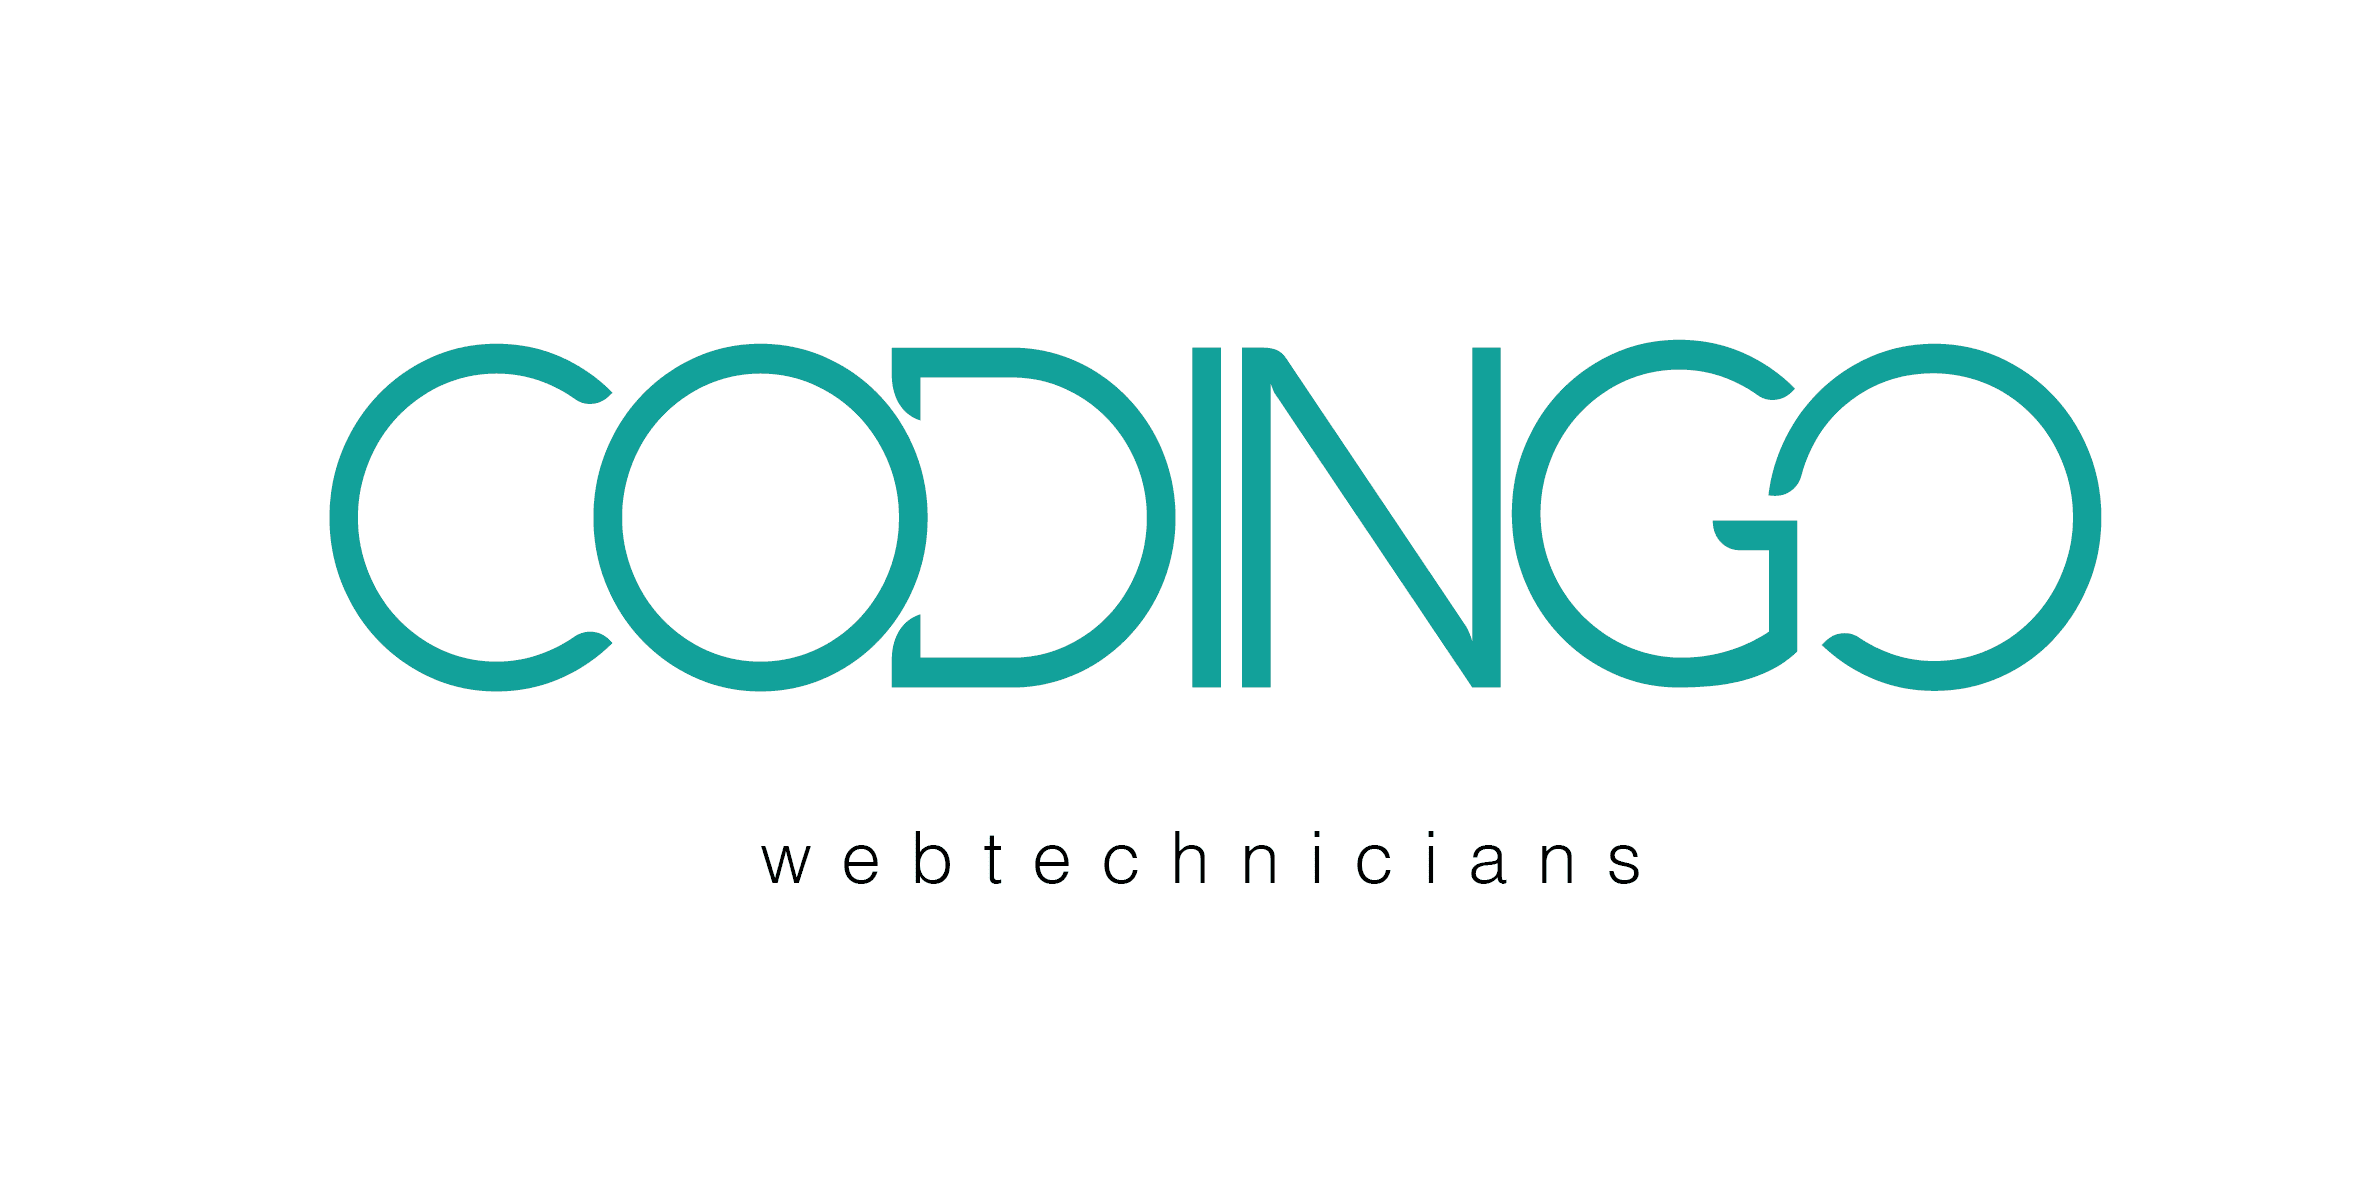 codingo logo